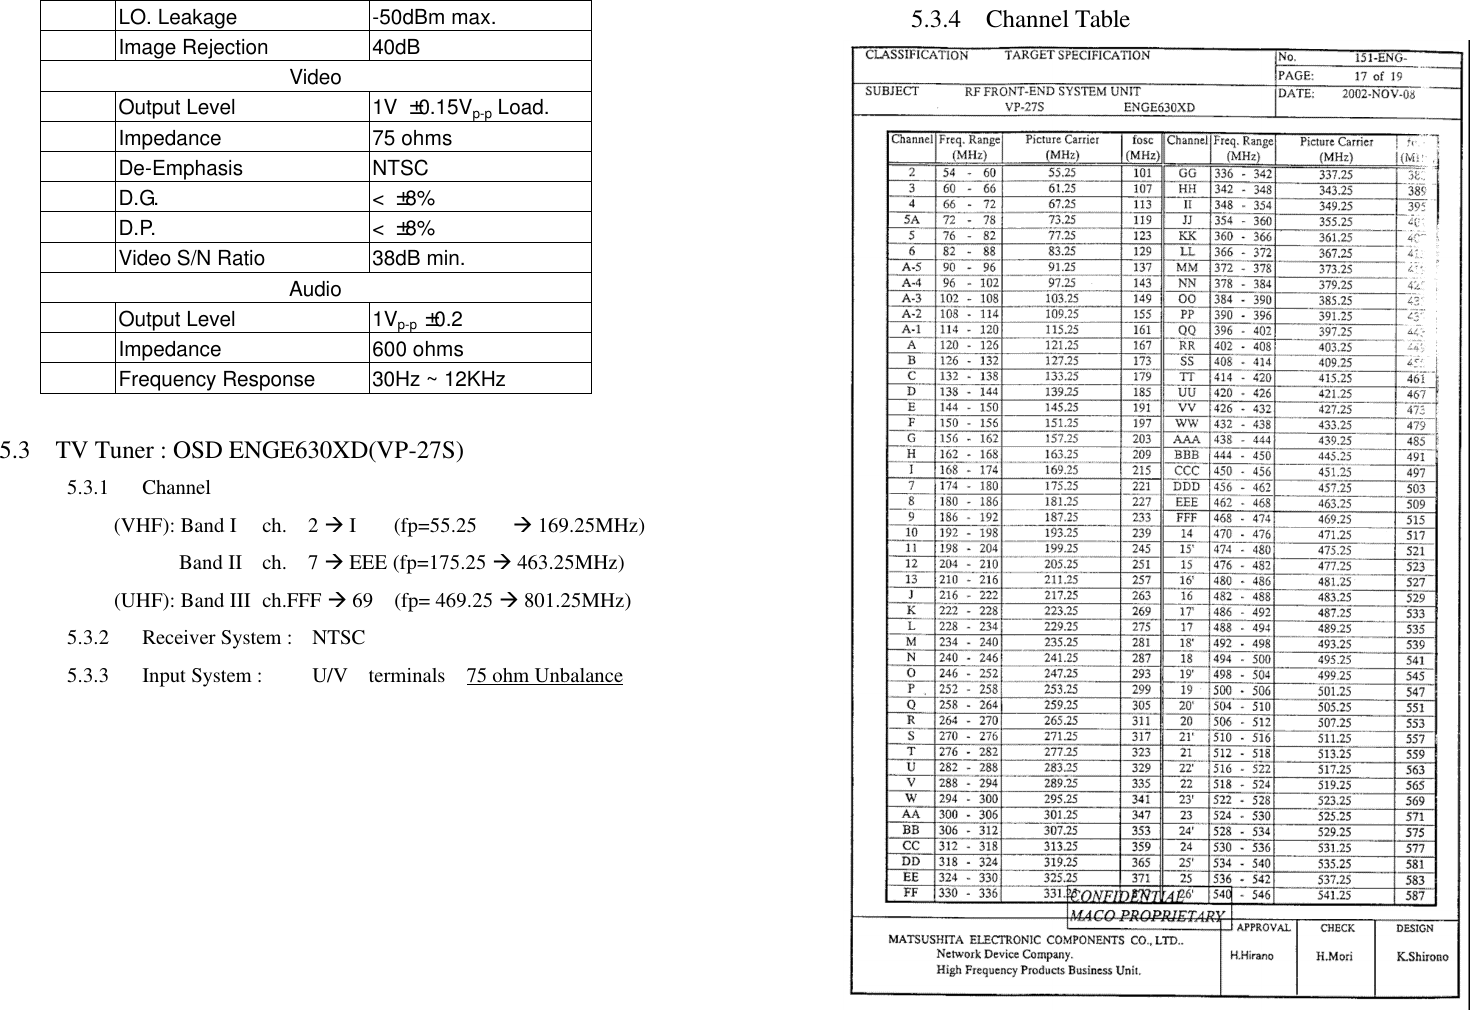  LO. Leakage -50dBm max.  Image Rejection 40dB Video  Output Level 1V  ±0.15Vp-p Load.  Impedance 75 ohms  De-Emphasis NTSC  D.G. &lt;  ±8%  D.P. &lt;  ±8%  Video S/N Ratio 38dB min. Audio  Output Level 1Vp-p  ±0.2  Impedance 600 ohms  Frequency Response 30Hz ~ 12KHz  5.3  TV Tuner : OSD ENGE630XD(VP-27S) 5.3.1 Channel (VHF): Band I ch.  2 à I    (fp=55.25   à 169.25MHz) Band II ch.  7 à EEE (fp=175.25 à 463.25MHz) (UHF): Band III ch.FFF à 69  (fp= 469.25 à 801.25MHz) 5.3.2 Receiver System : NTSC 5.3.3 Input System : U/V  terminals  75 ohm Unbalance          5.3.4  Channel Table  